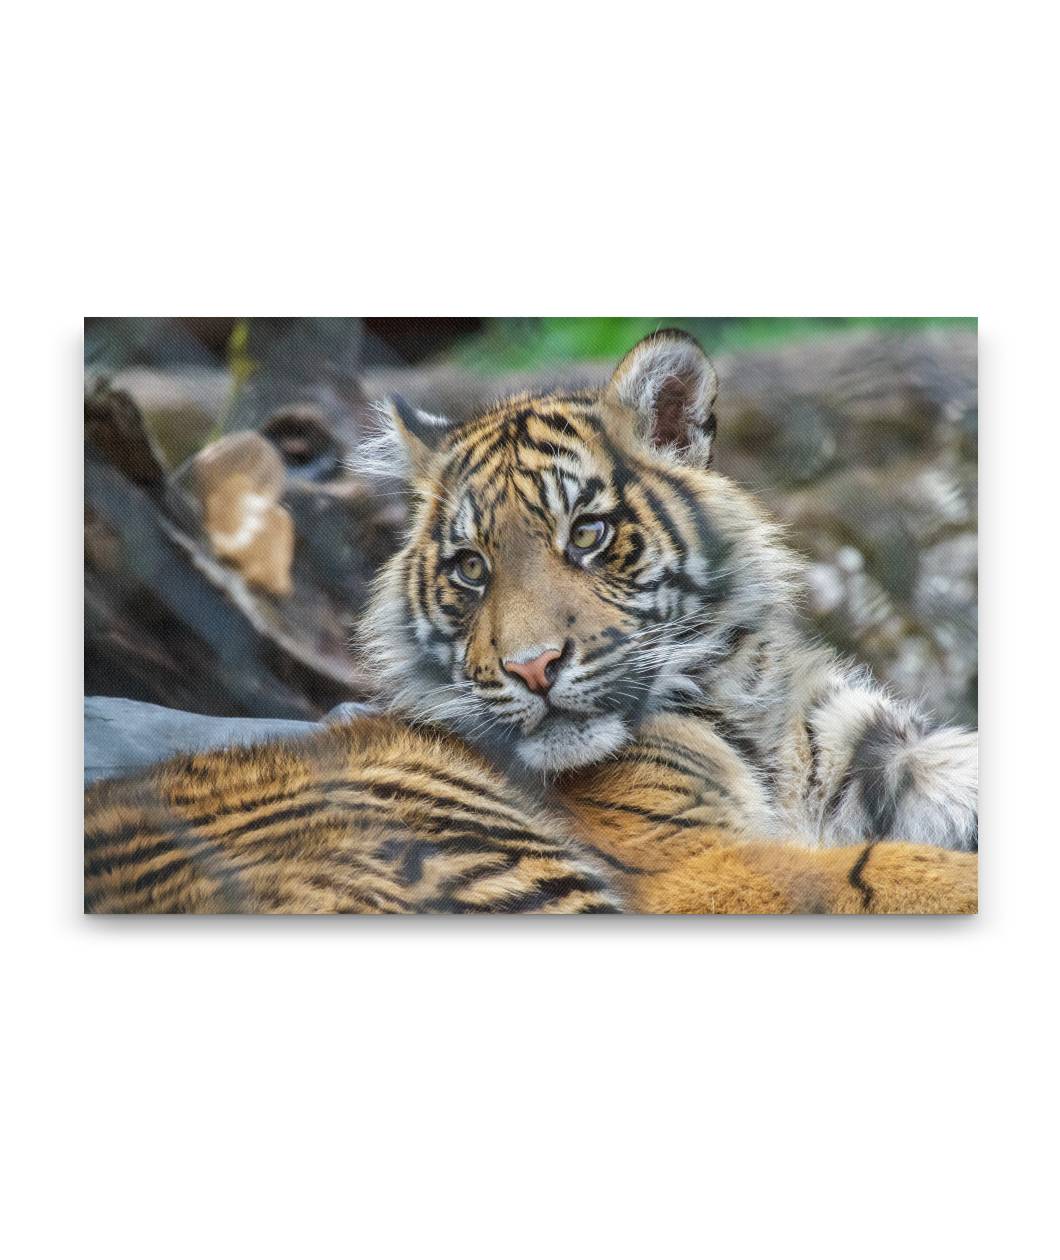 Sumatran Tiger, Wild Animal Park, Winston, Oregon, USA